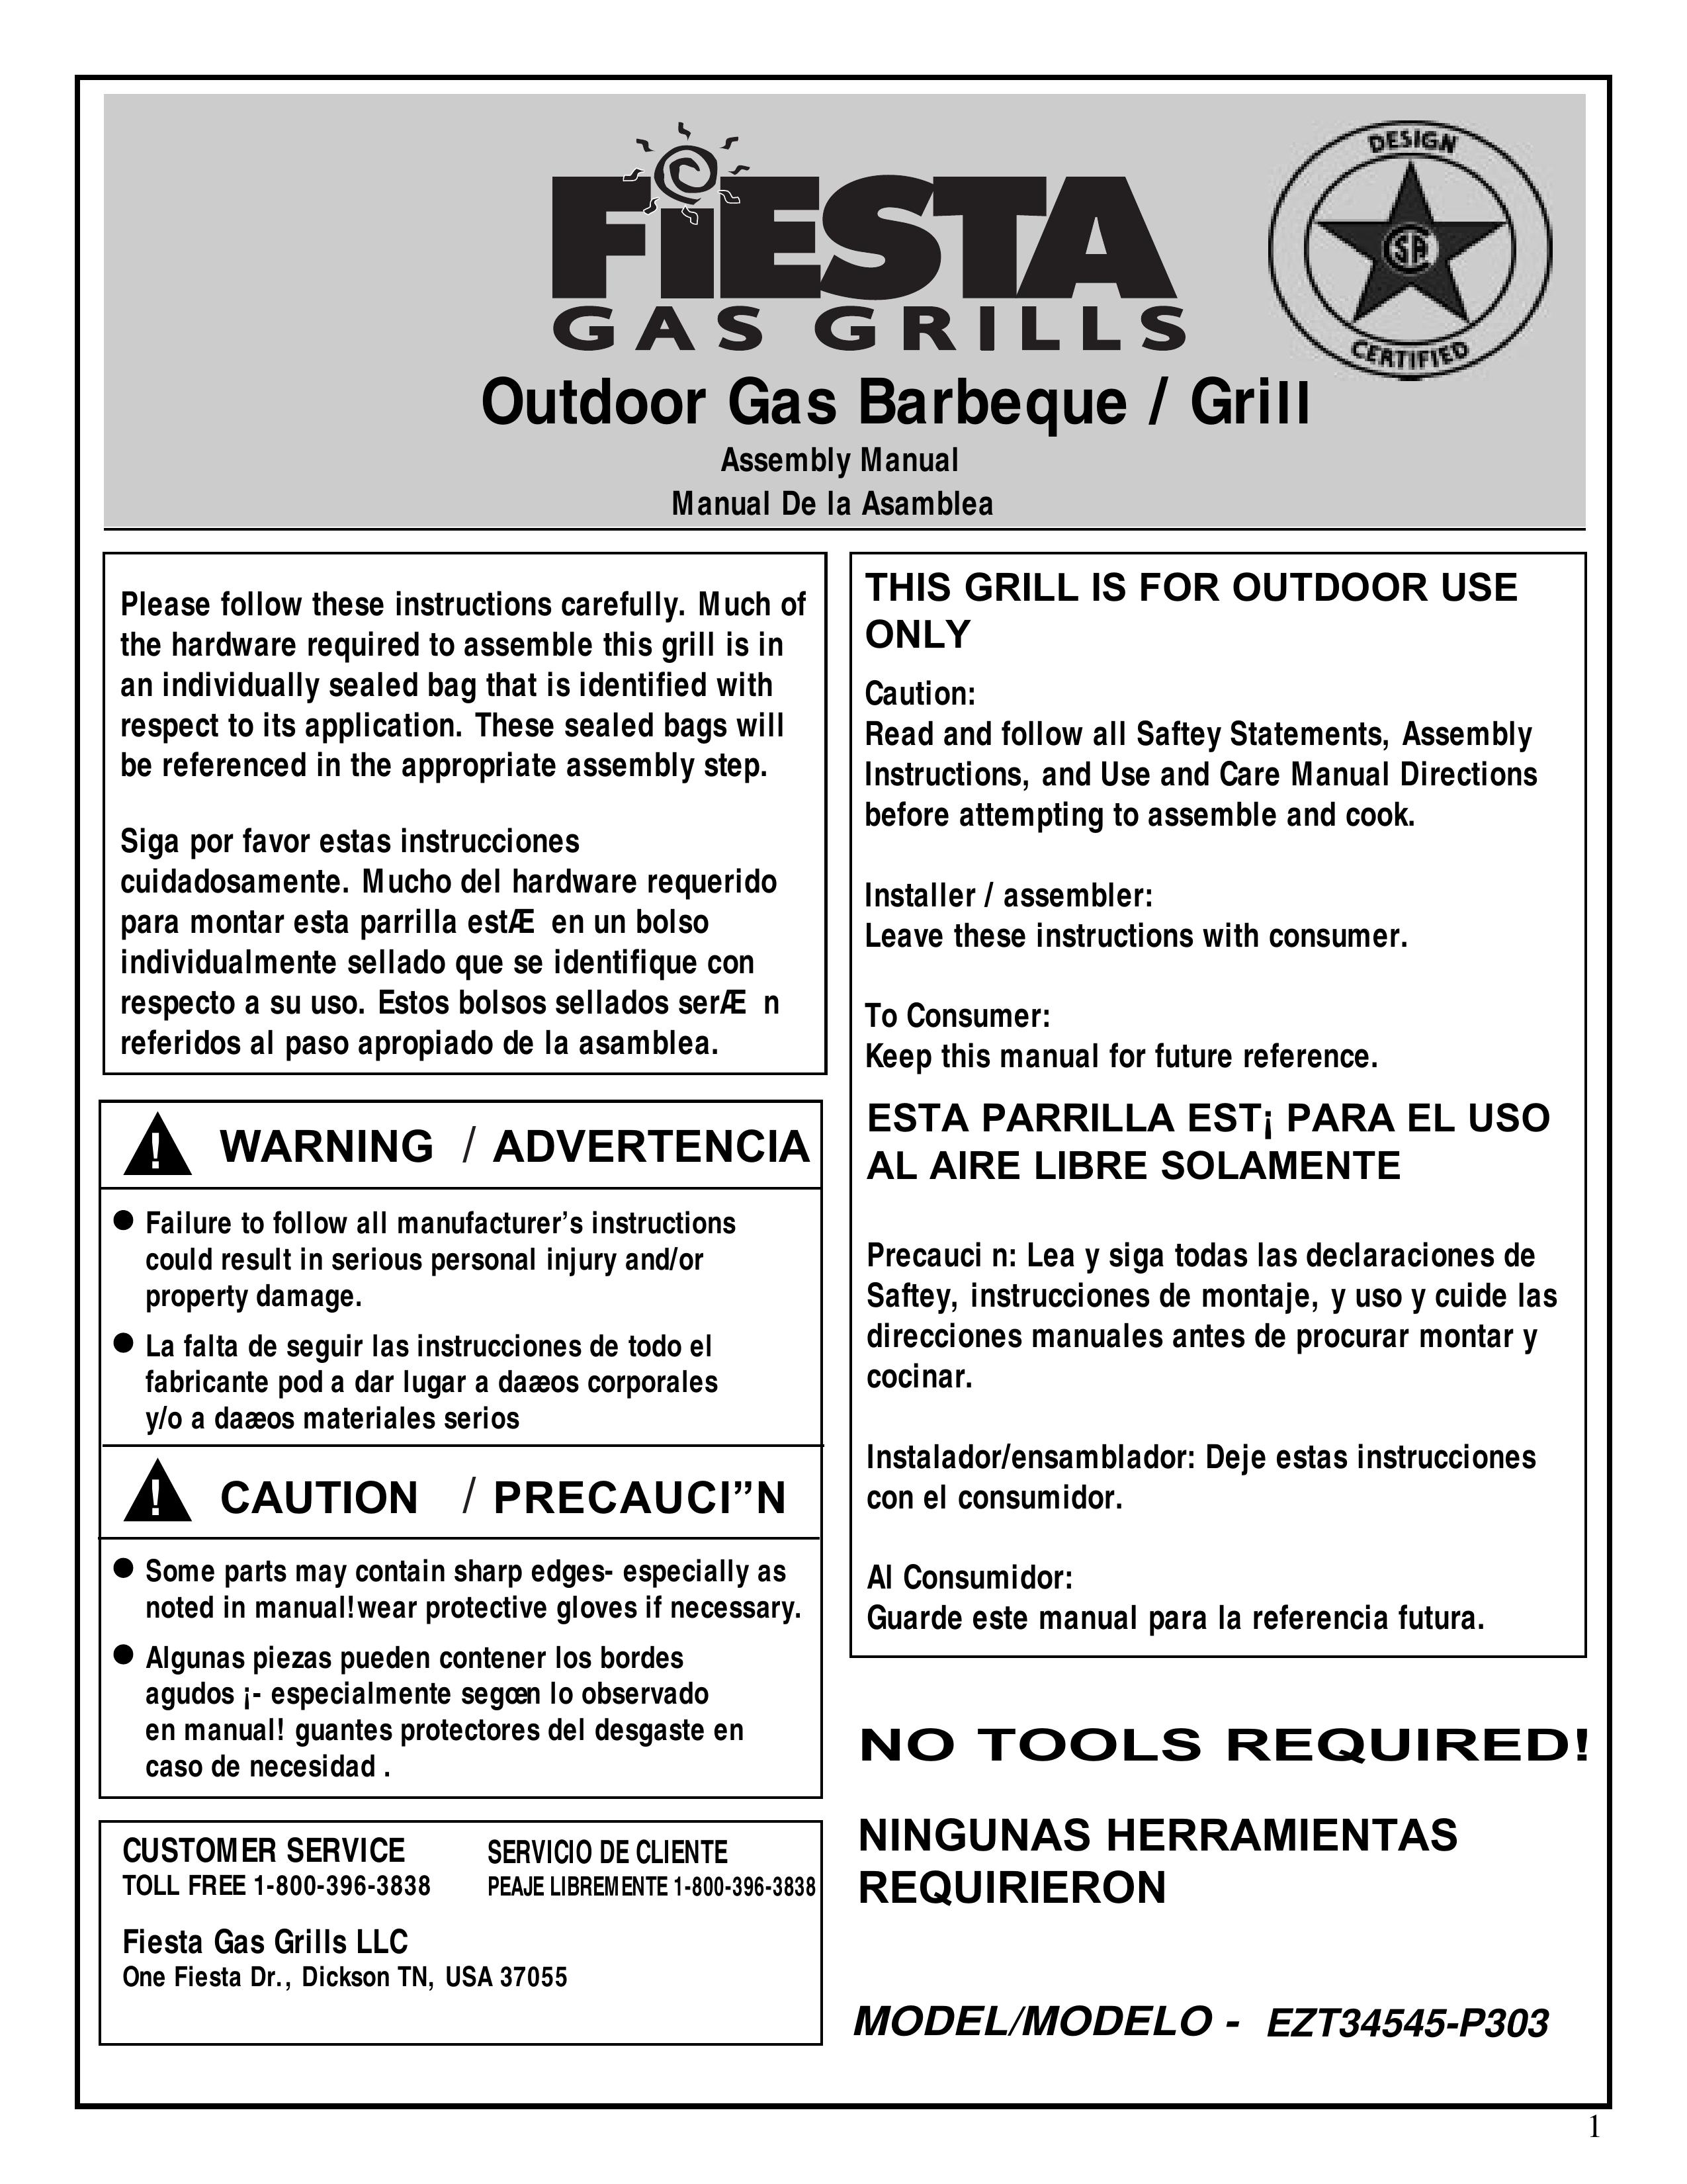 Fiesta EZT34545-P303 Gas Grill User Manual